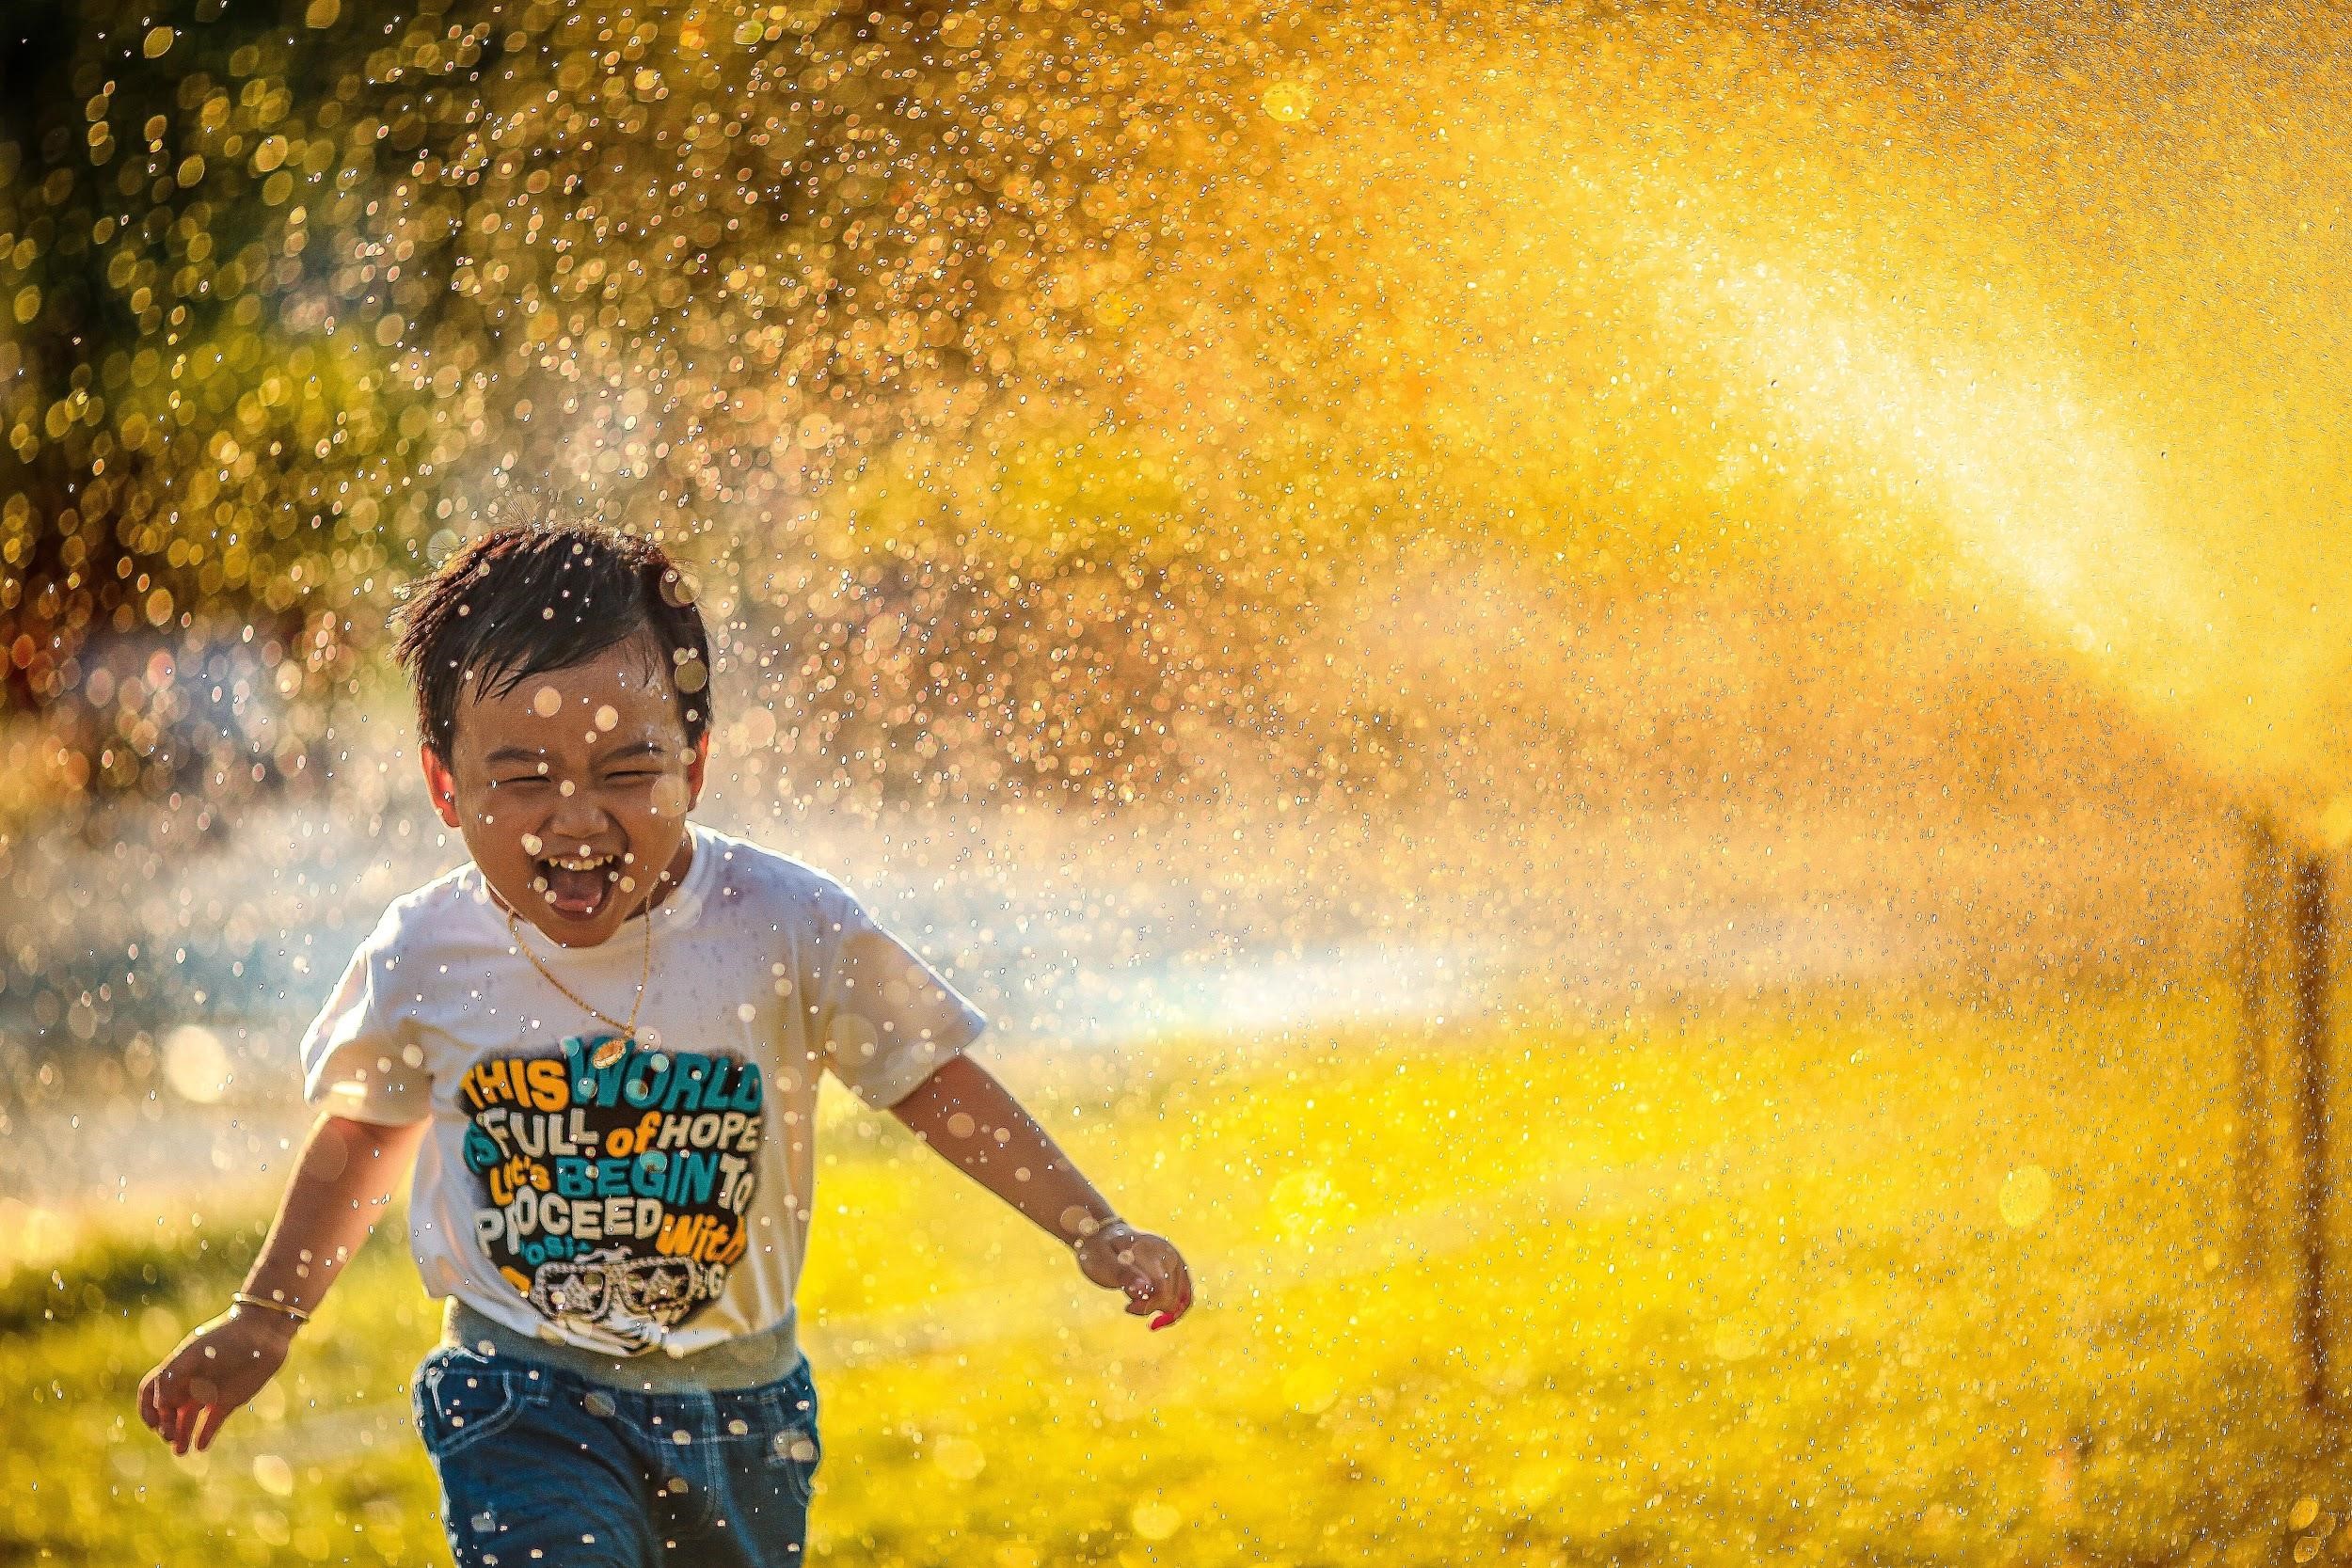 Laughing child running through sprinklers